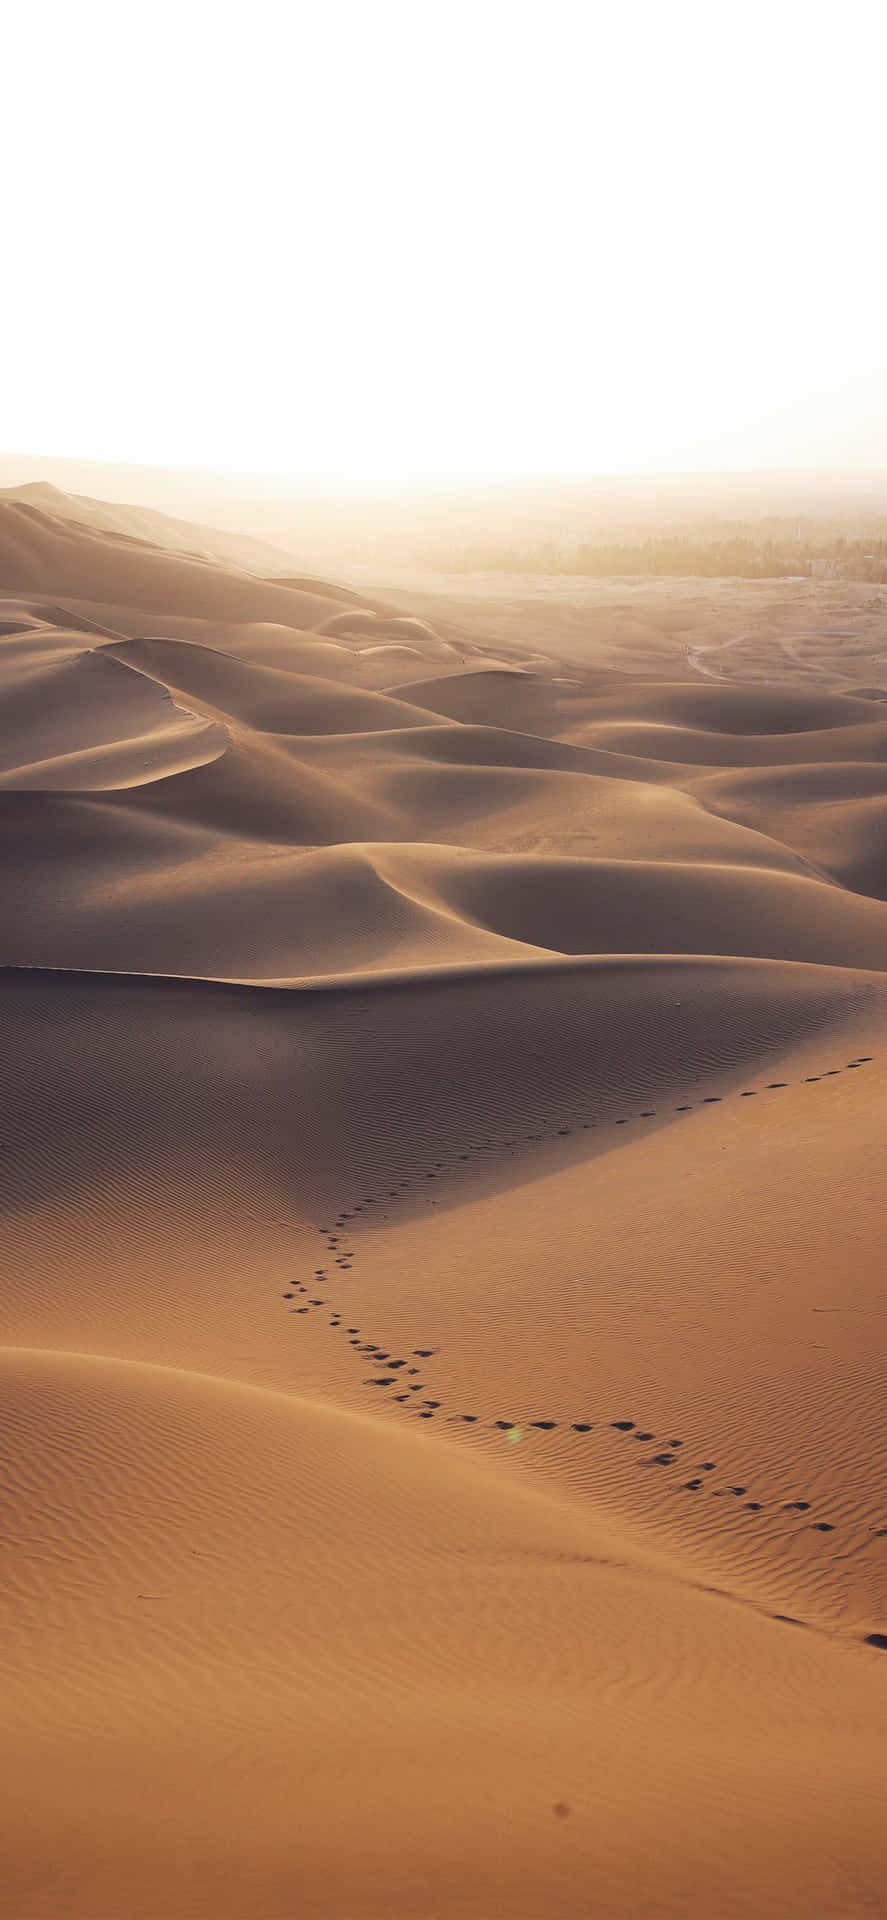 Footprints On The Sand Of Desert Iphone Wallpaper